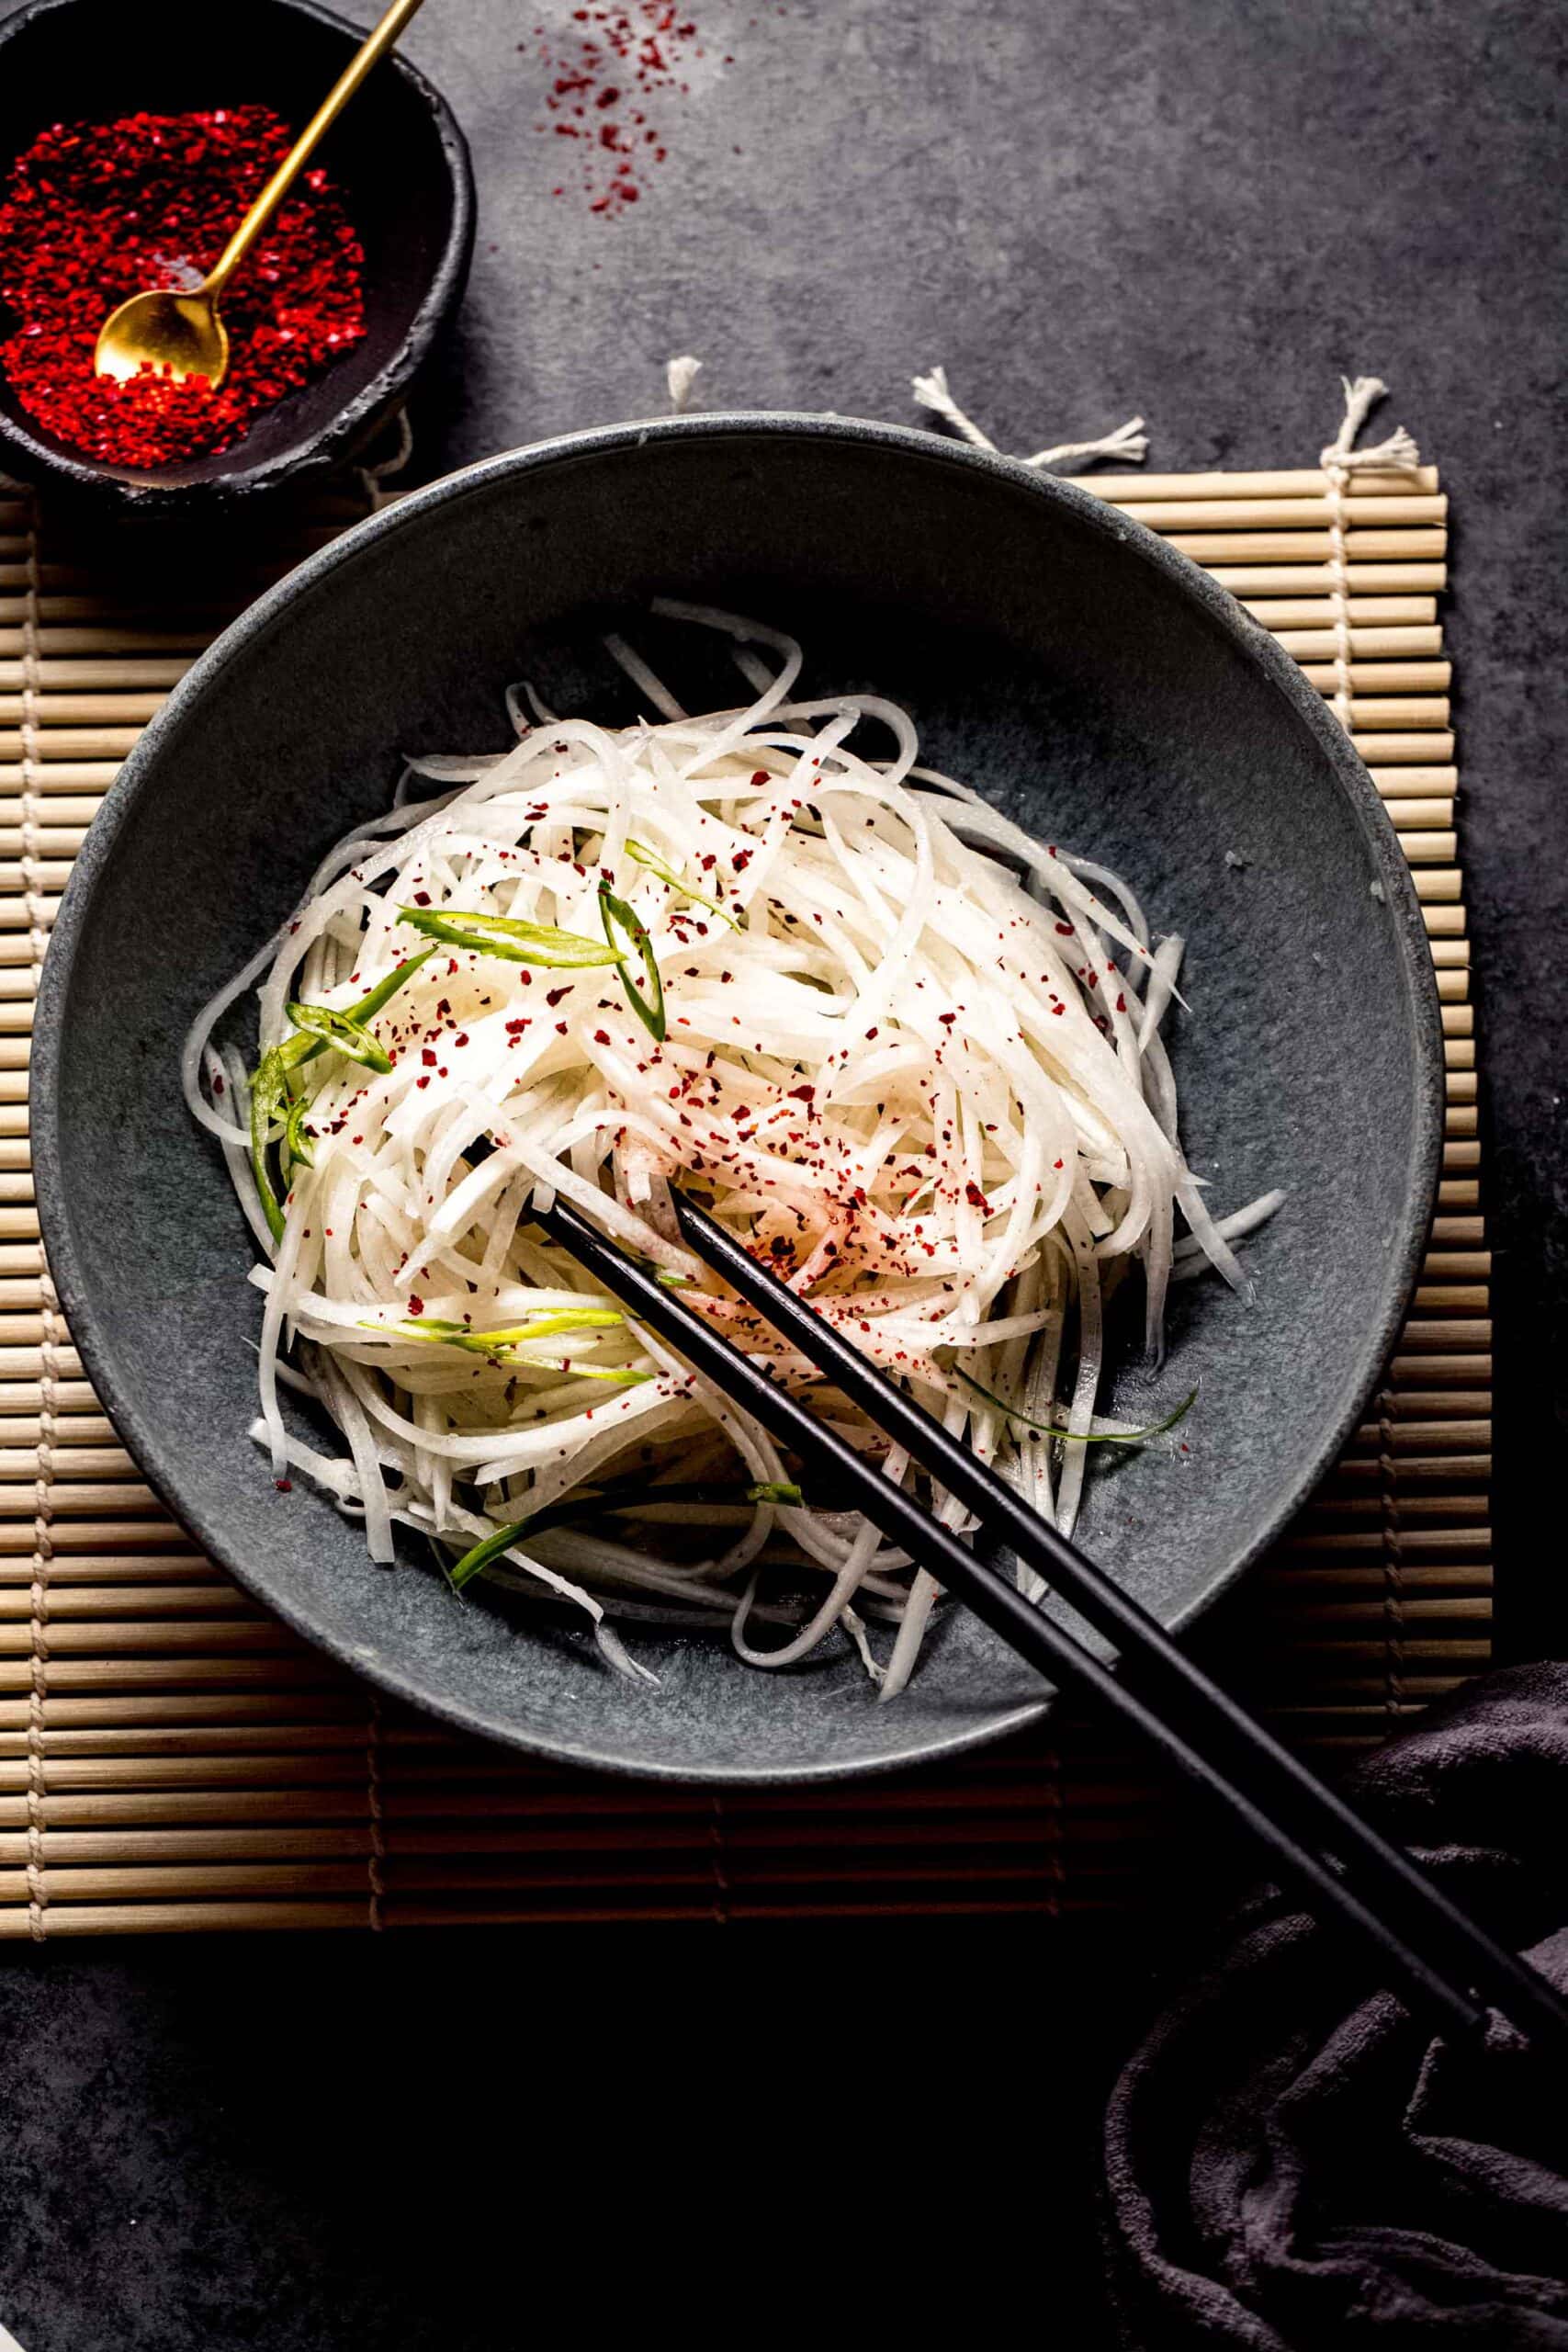 Overhead shot of daikon radish salad in grey bowl with chopsticks.